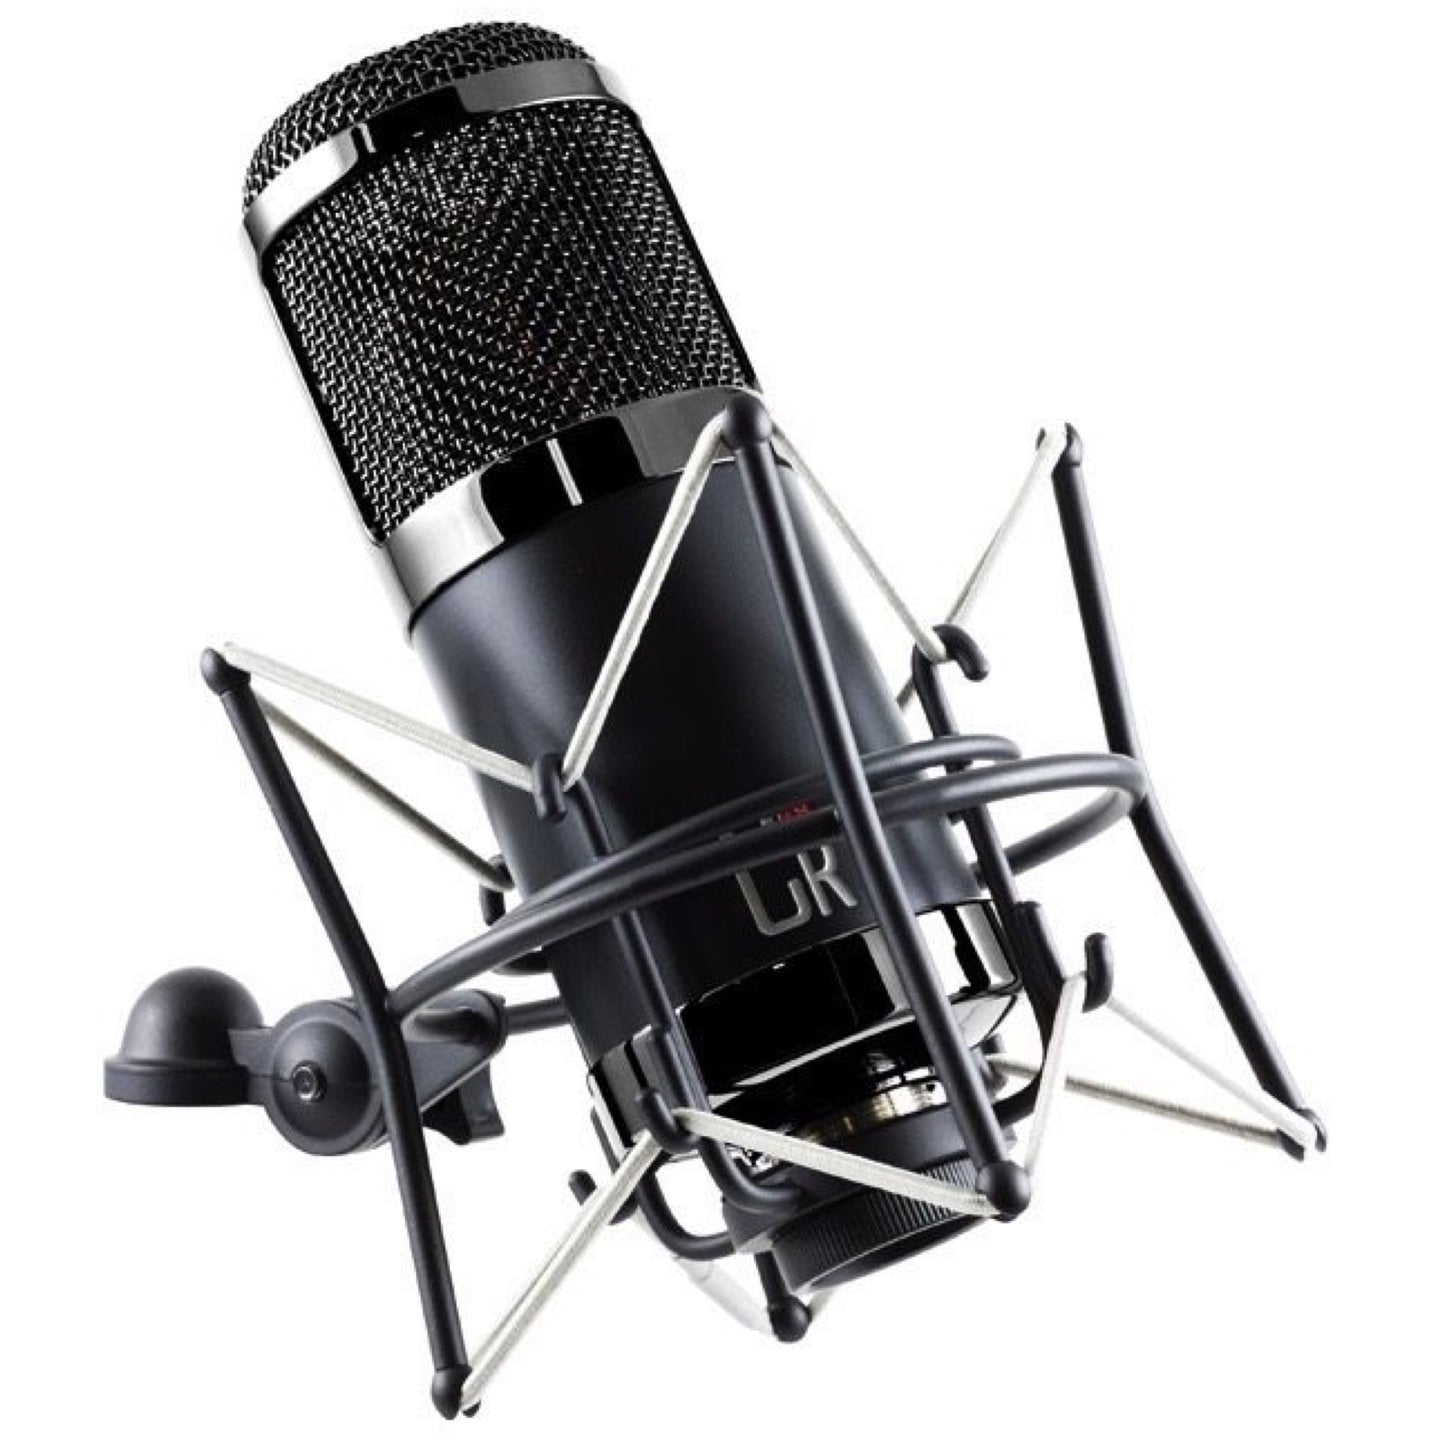 MXL CR89 Large-Diaphragm Condenser Microphone, Black Chrome